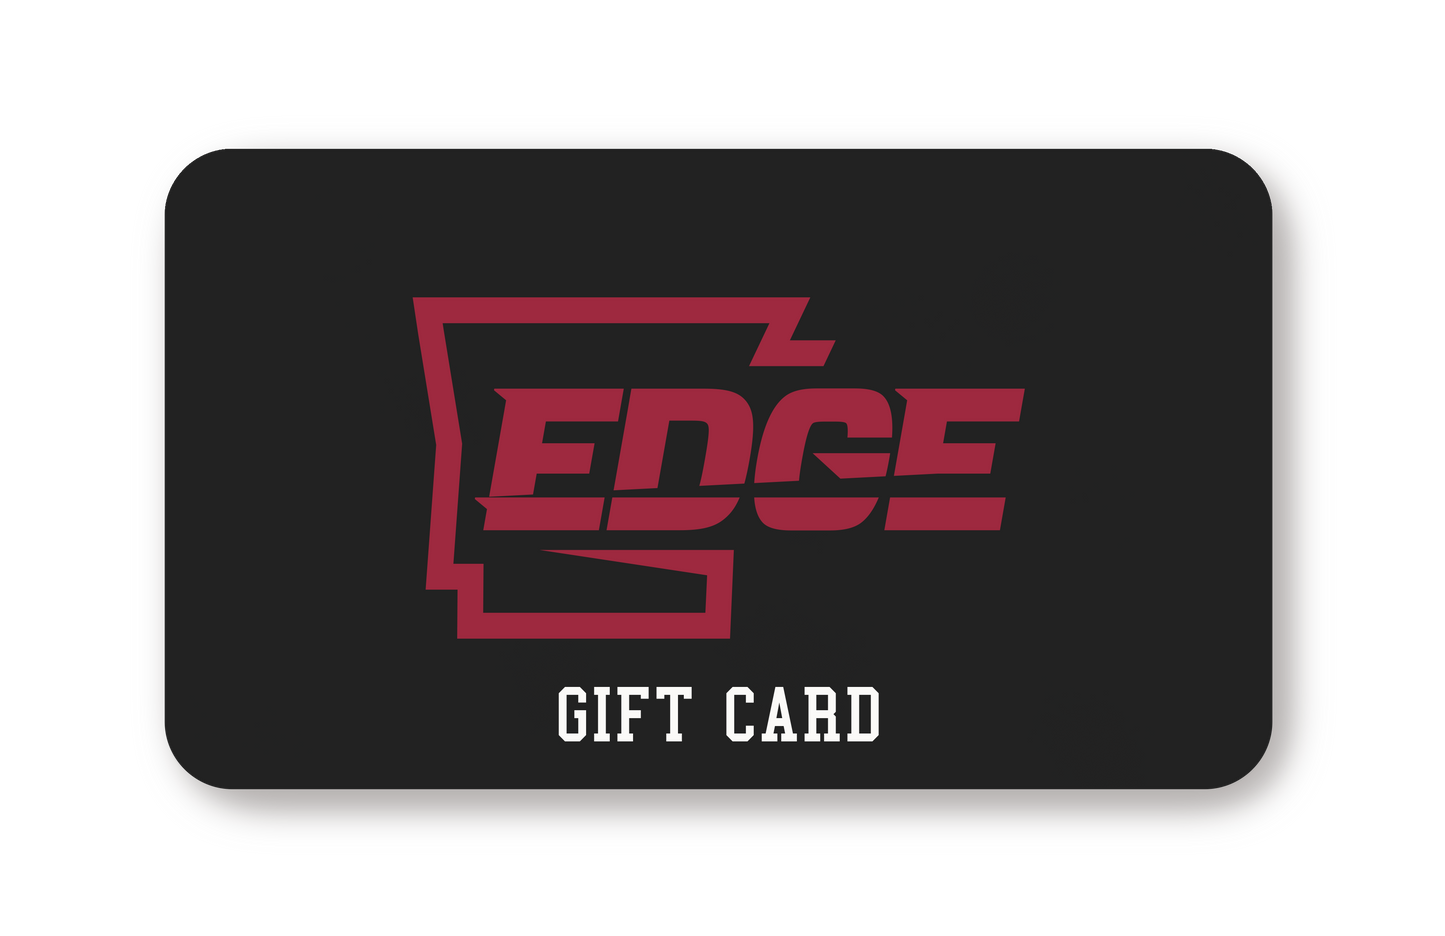 Arkansas Edge Gift Card